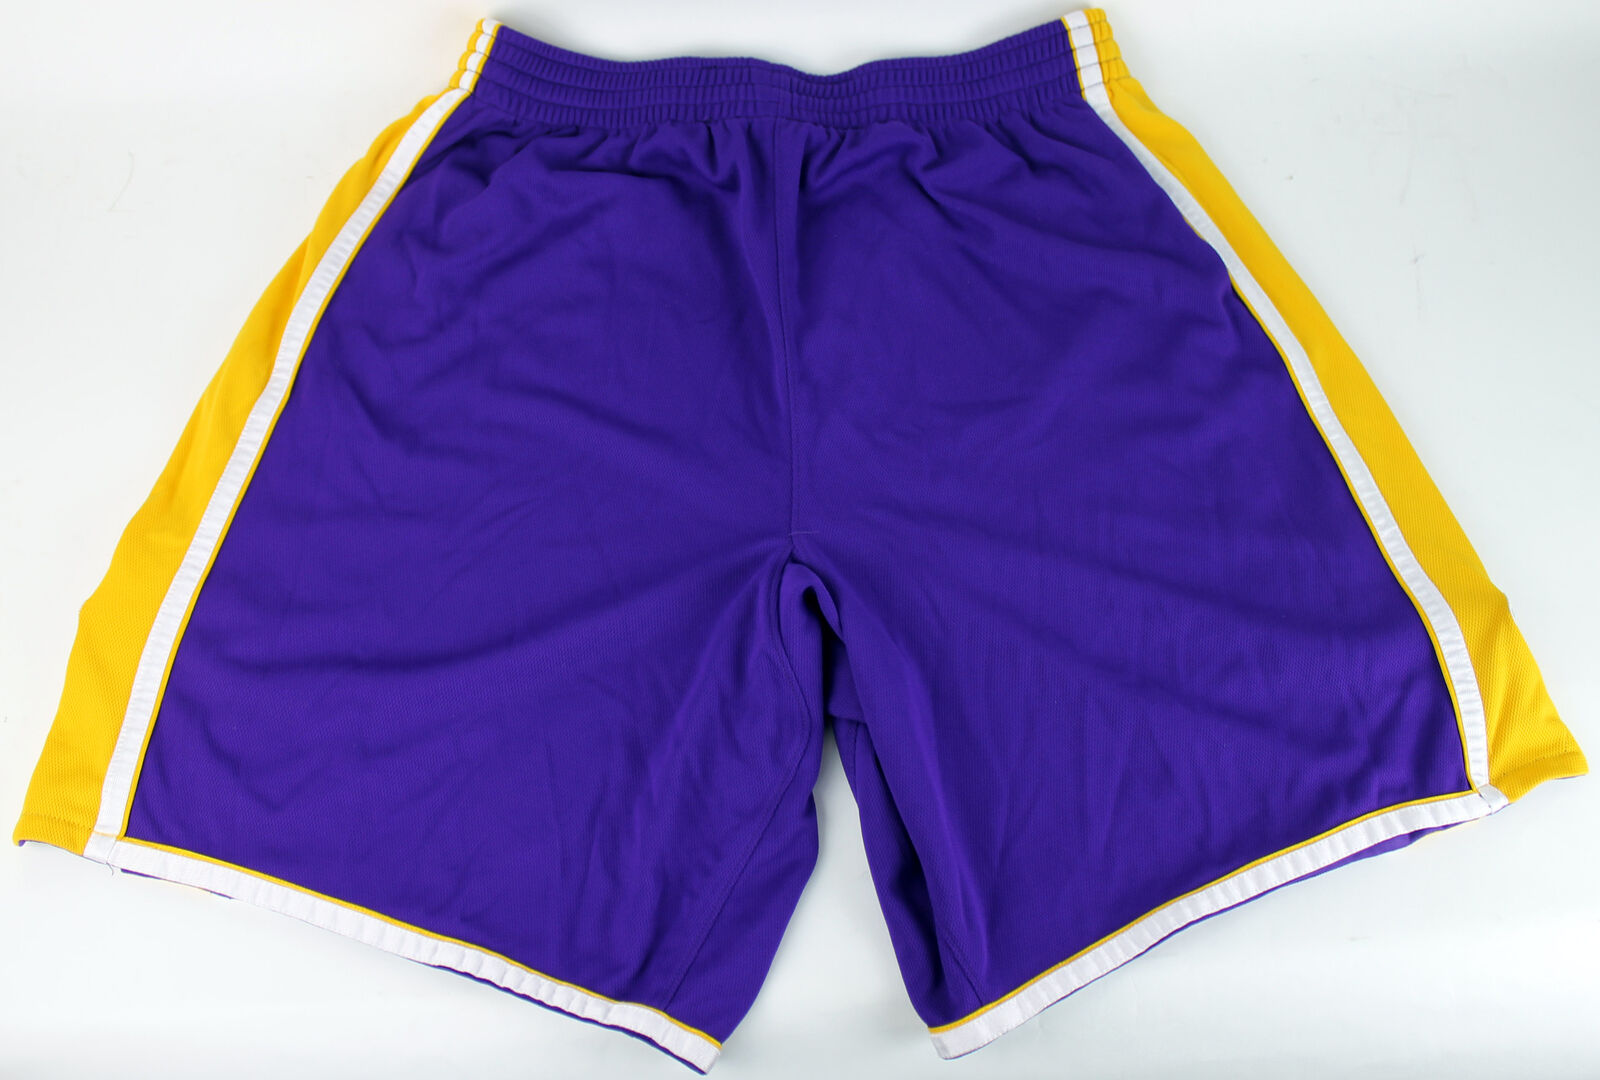 Lot Detail - Kobe Bryant Circa late 2000s Game Used Lakers Shorts ...